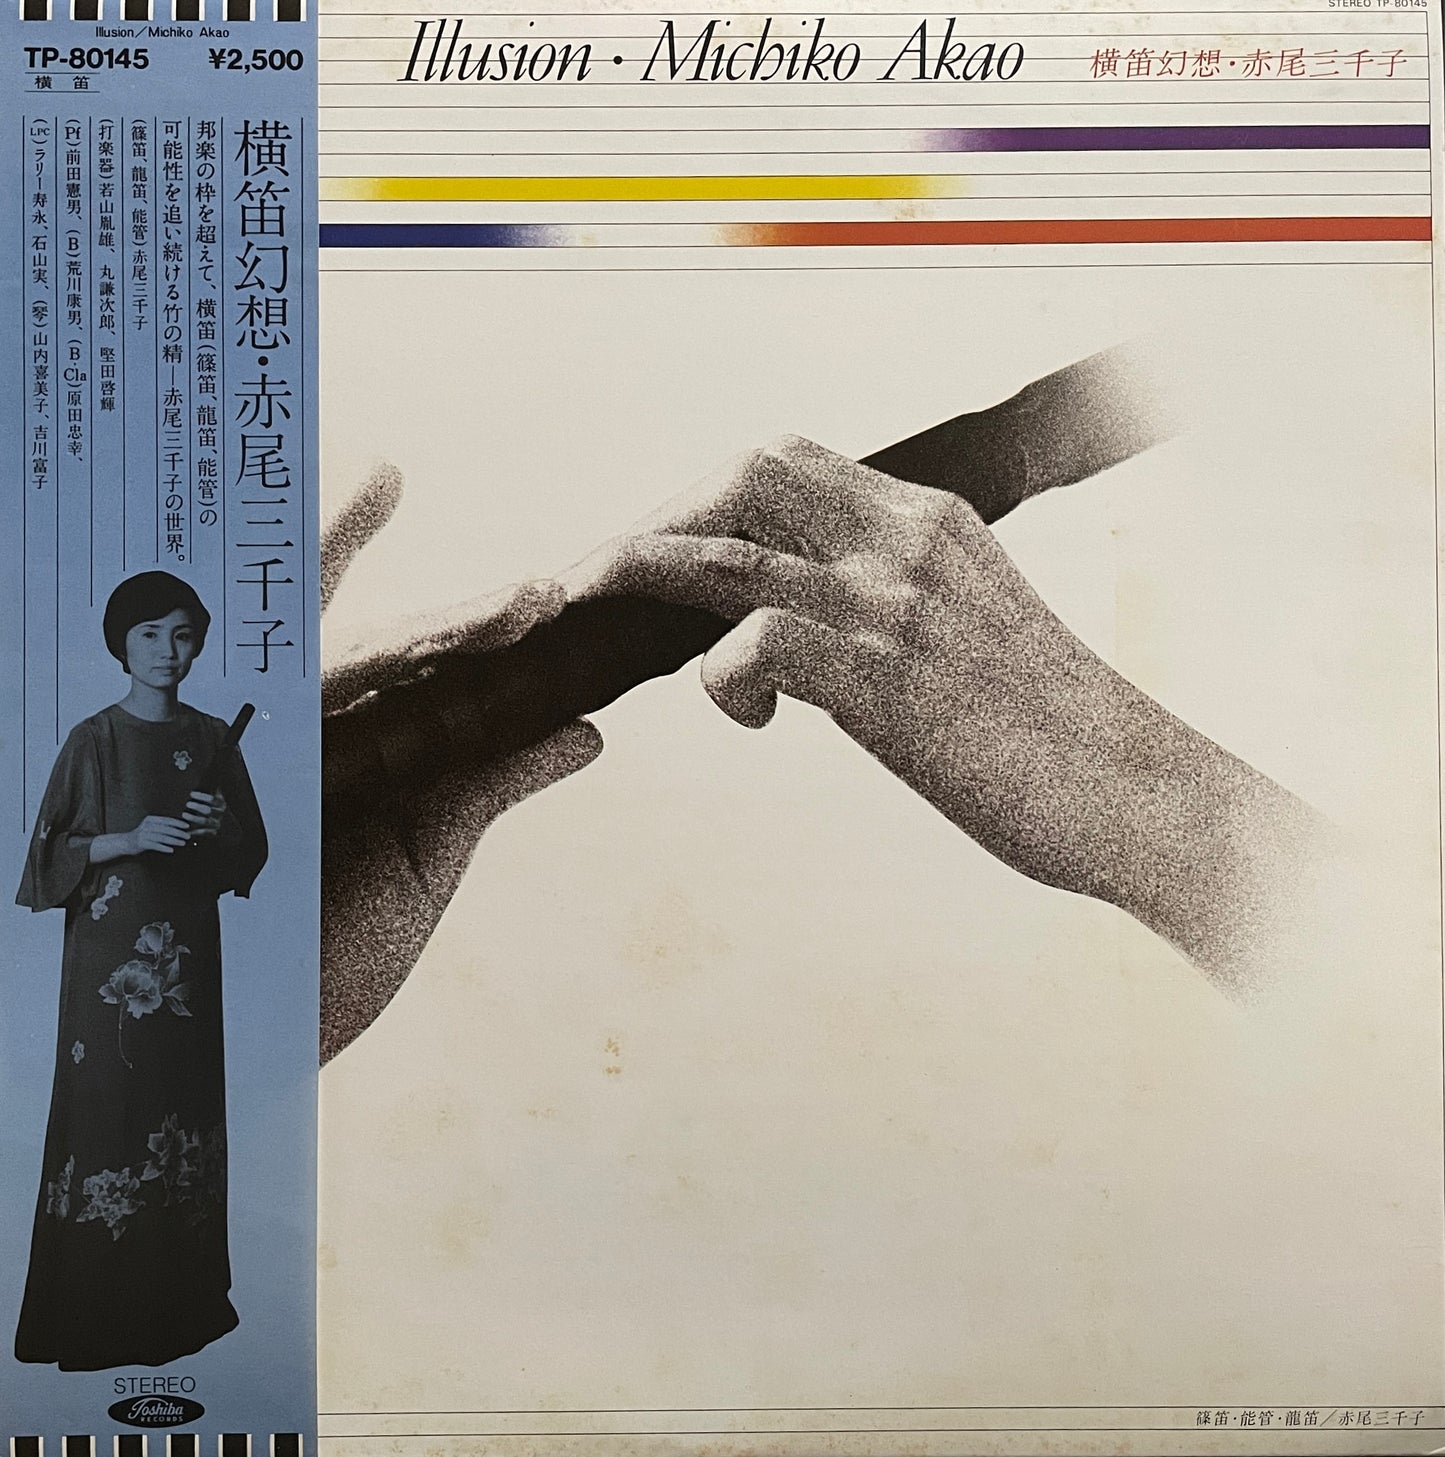 Michiko Akao "llusion" (1980)